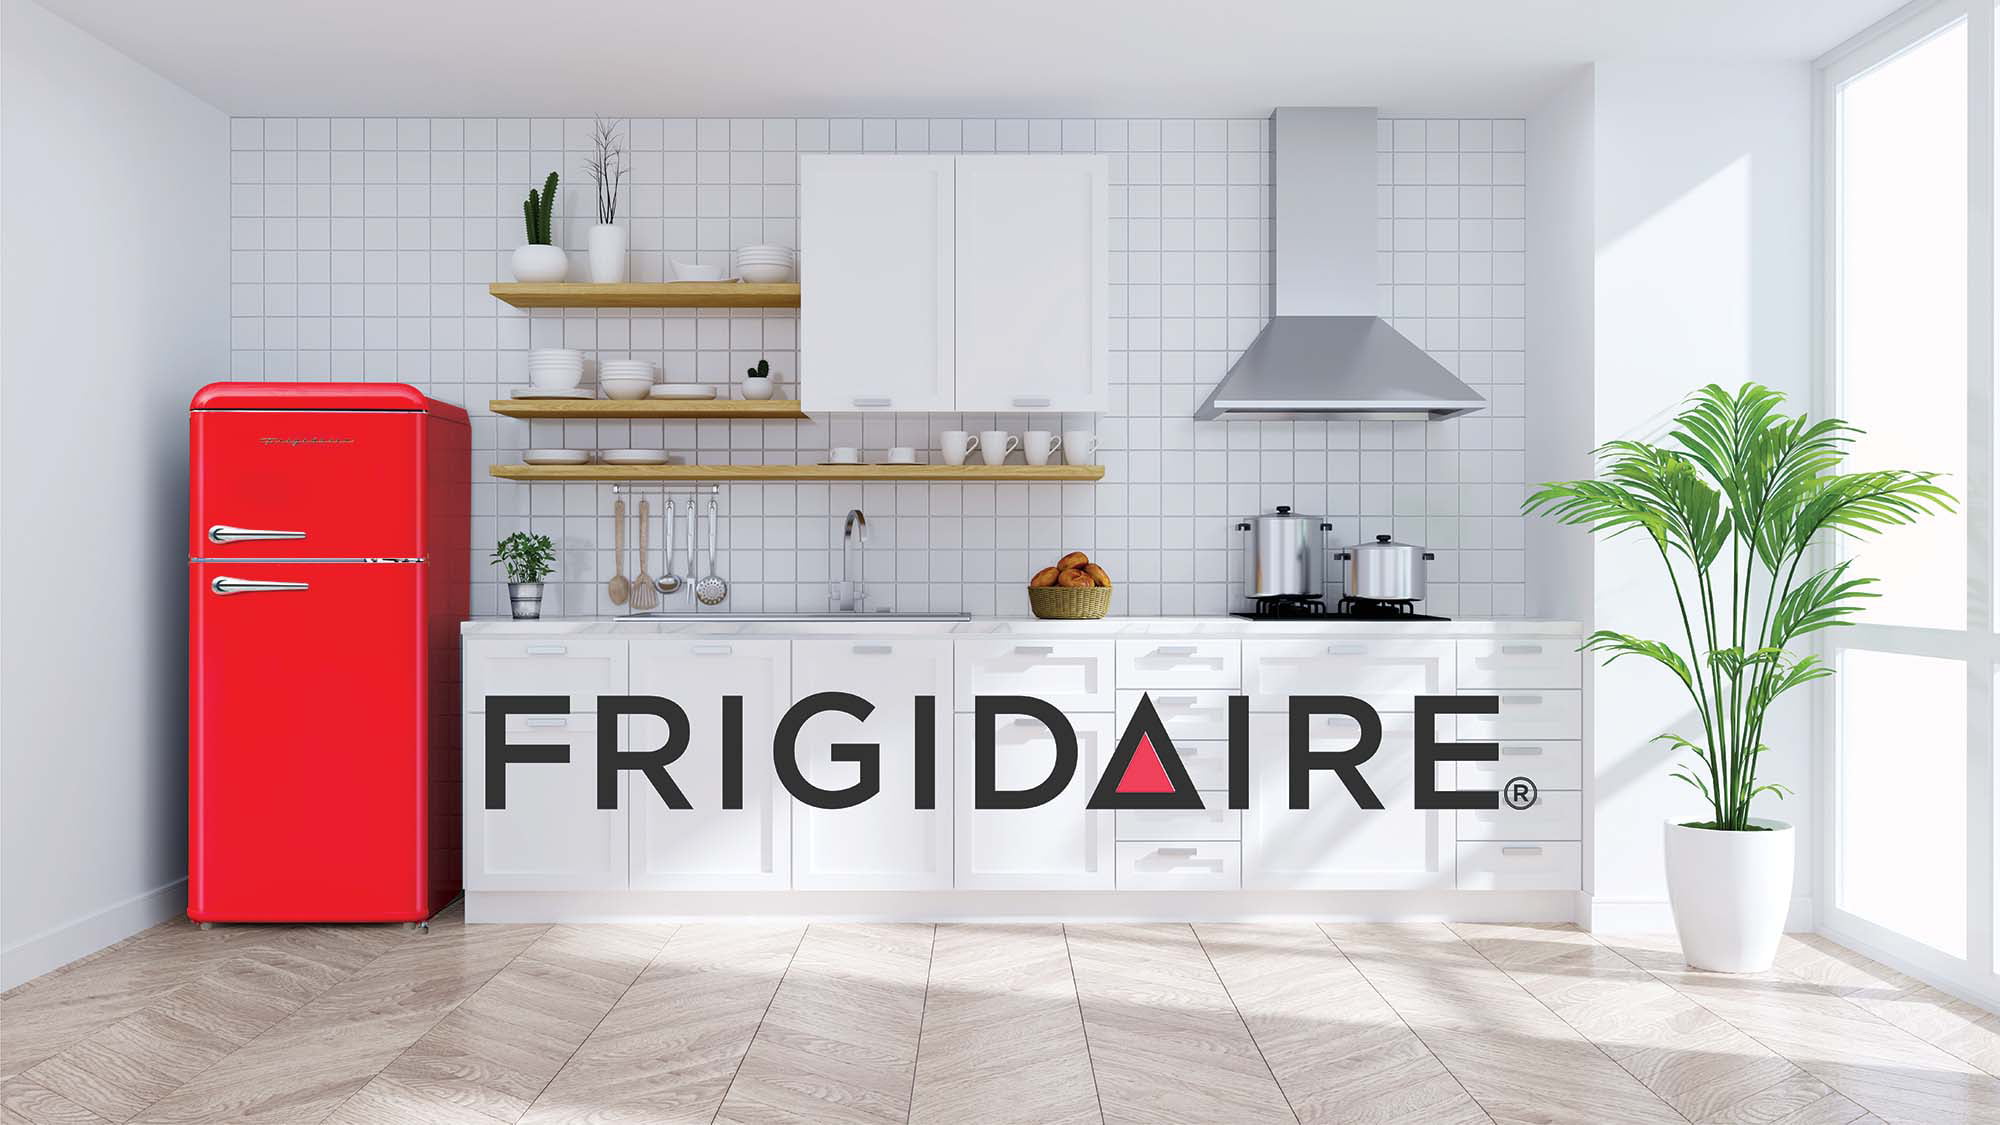 Frigidaire 7.5 Cu. Ft. Top Freezer Refrigerator in BLACK, Rounded Corners –  RETRO, EFR756 – The Market Depot